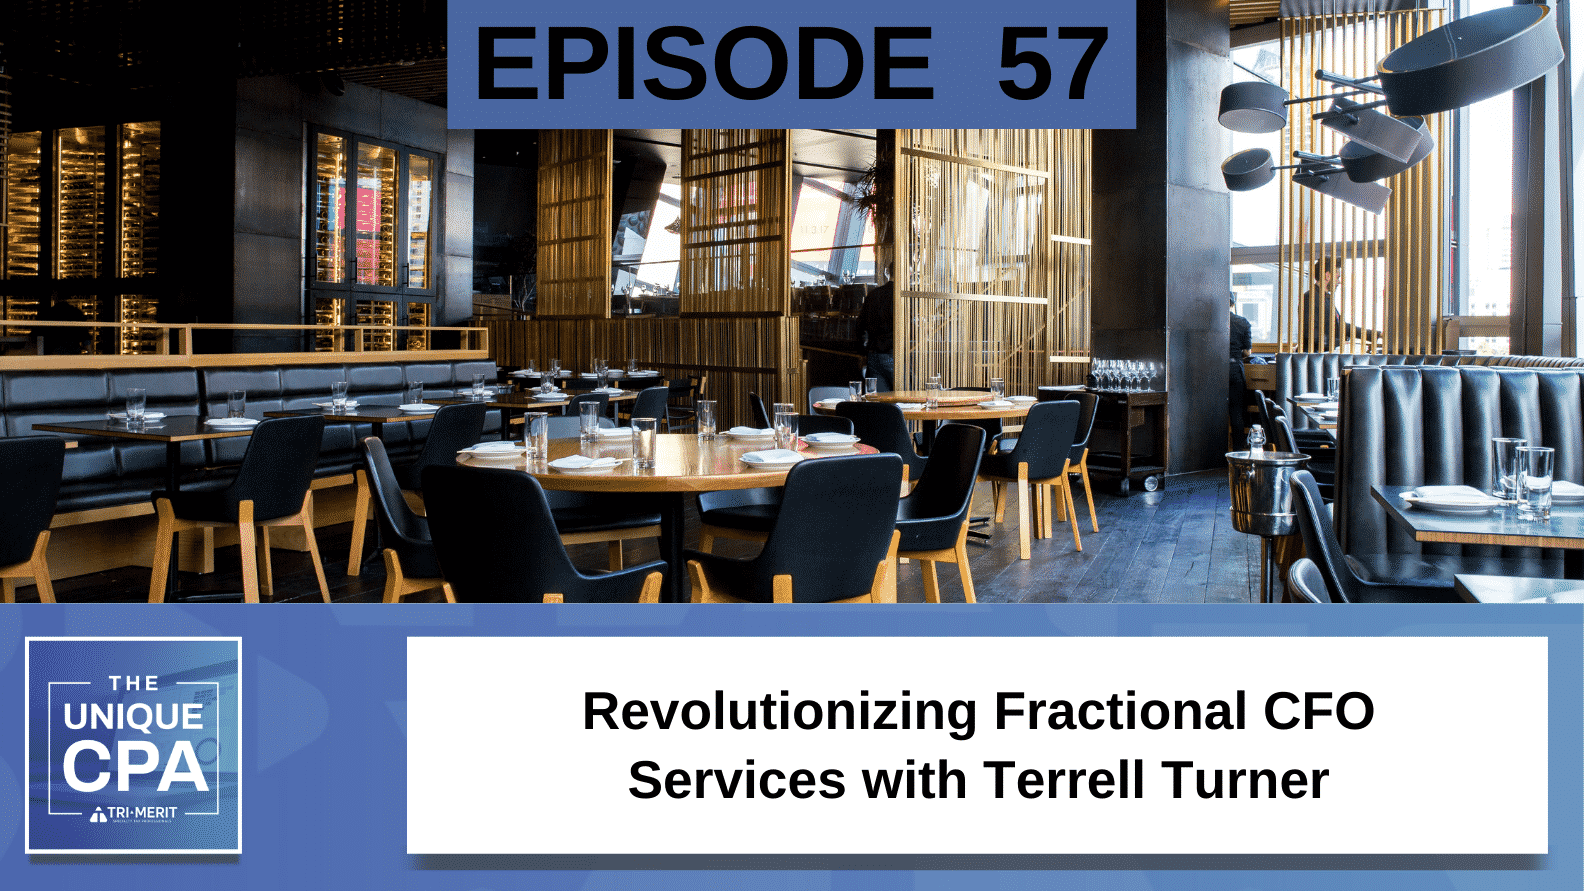 Unique Cpa Featured Image Ep 57 Terrell Turner 1 - Revolutionizing Fractional Cfo Services - Tri-Merit